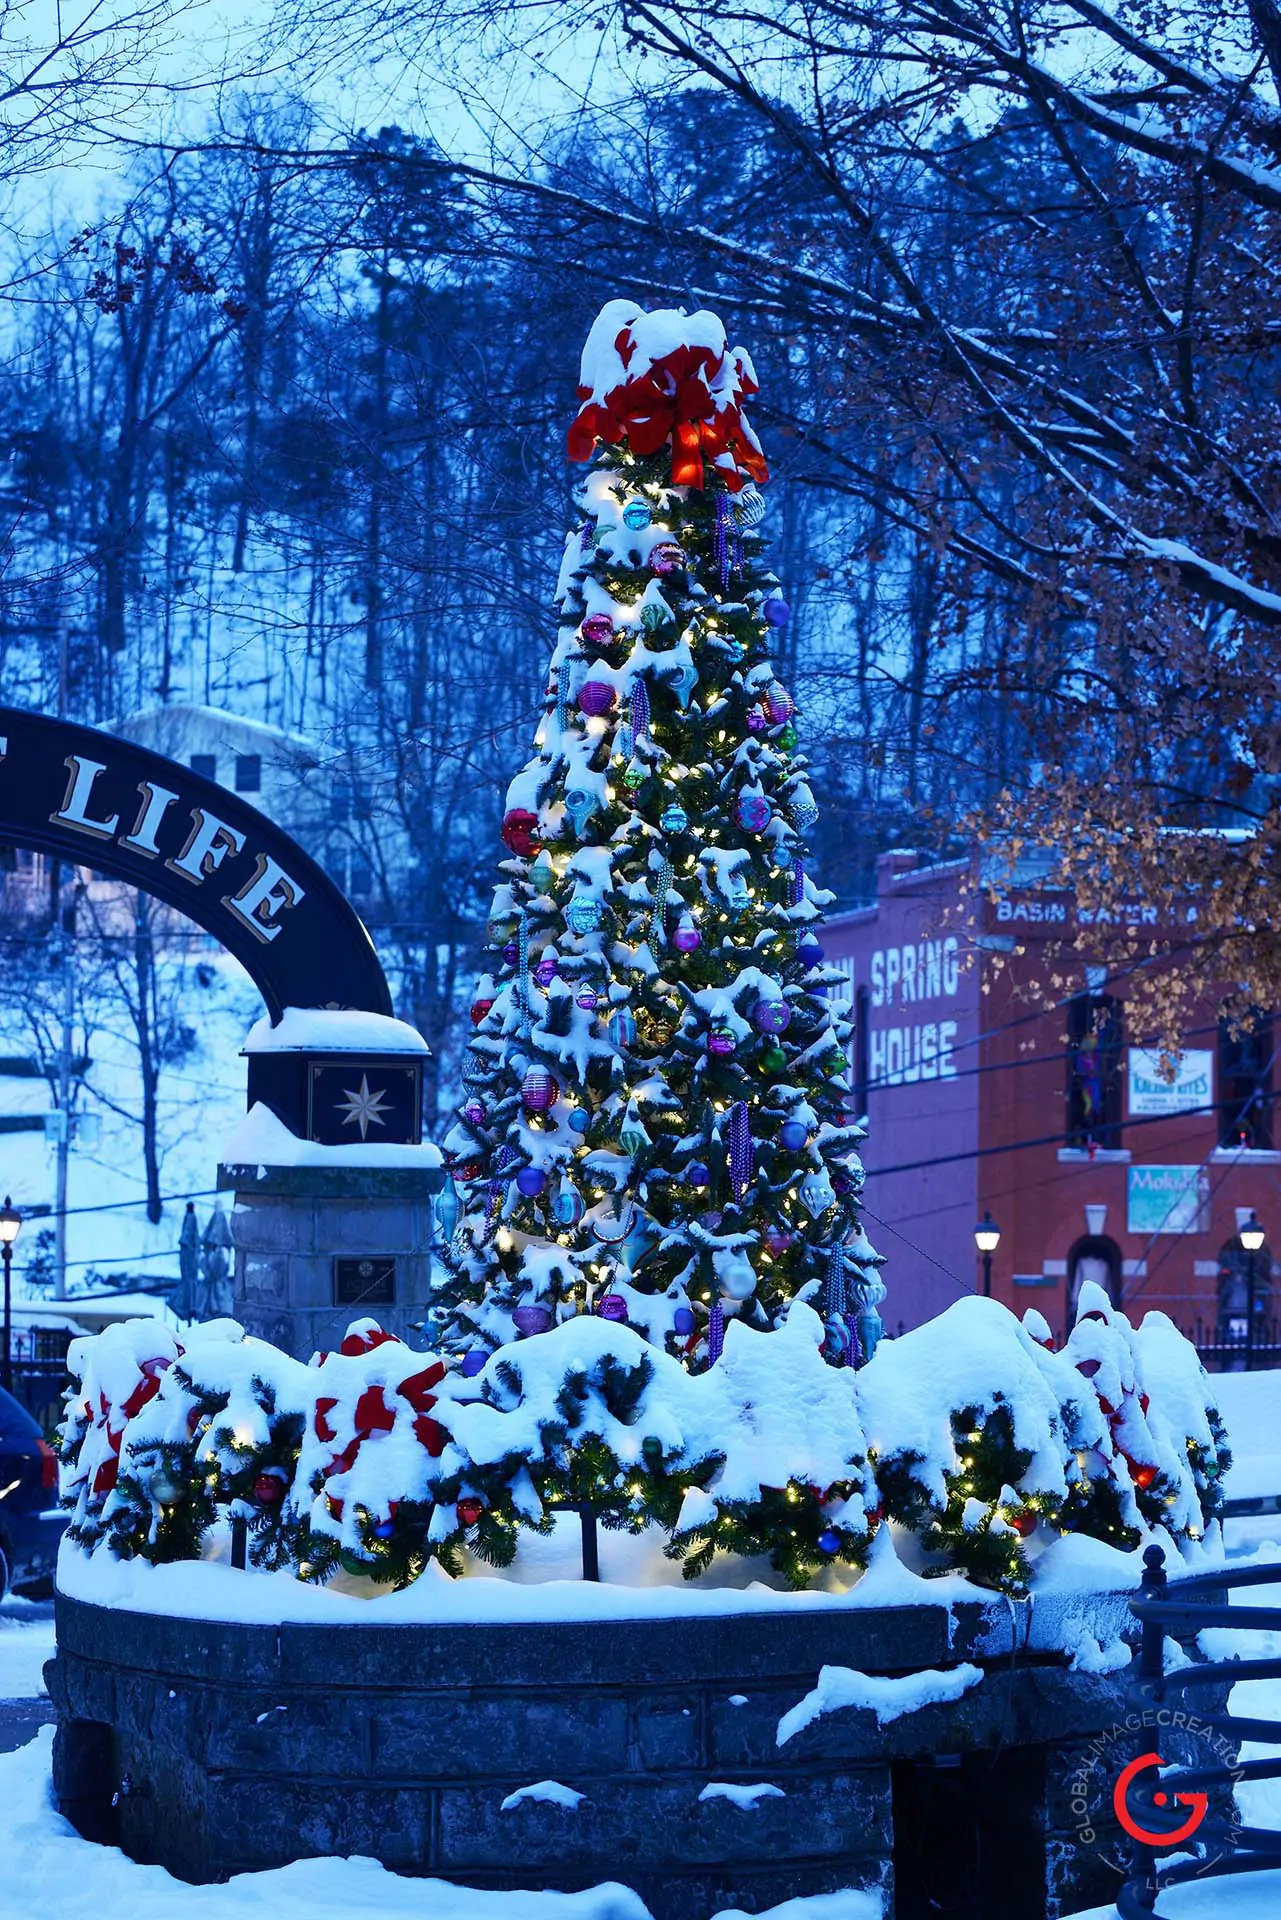 Basin Park Christmas Tree in the Snow - Eureka Springs, Arkansas Photography